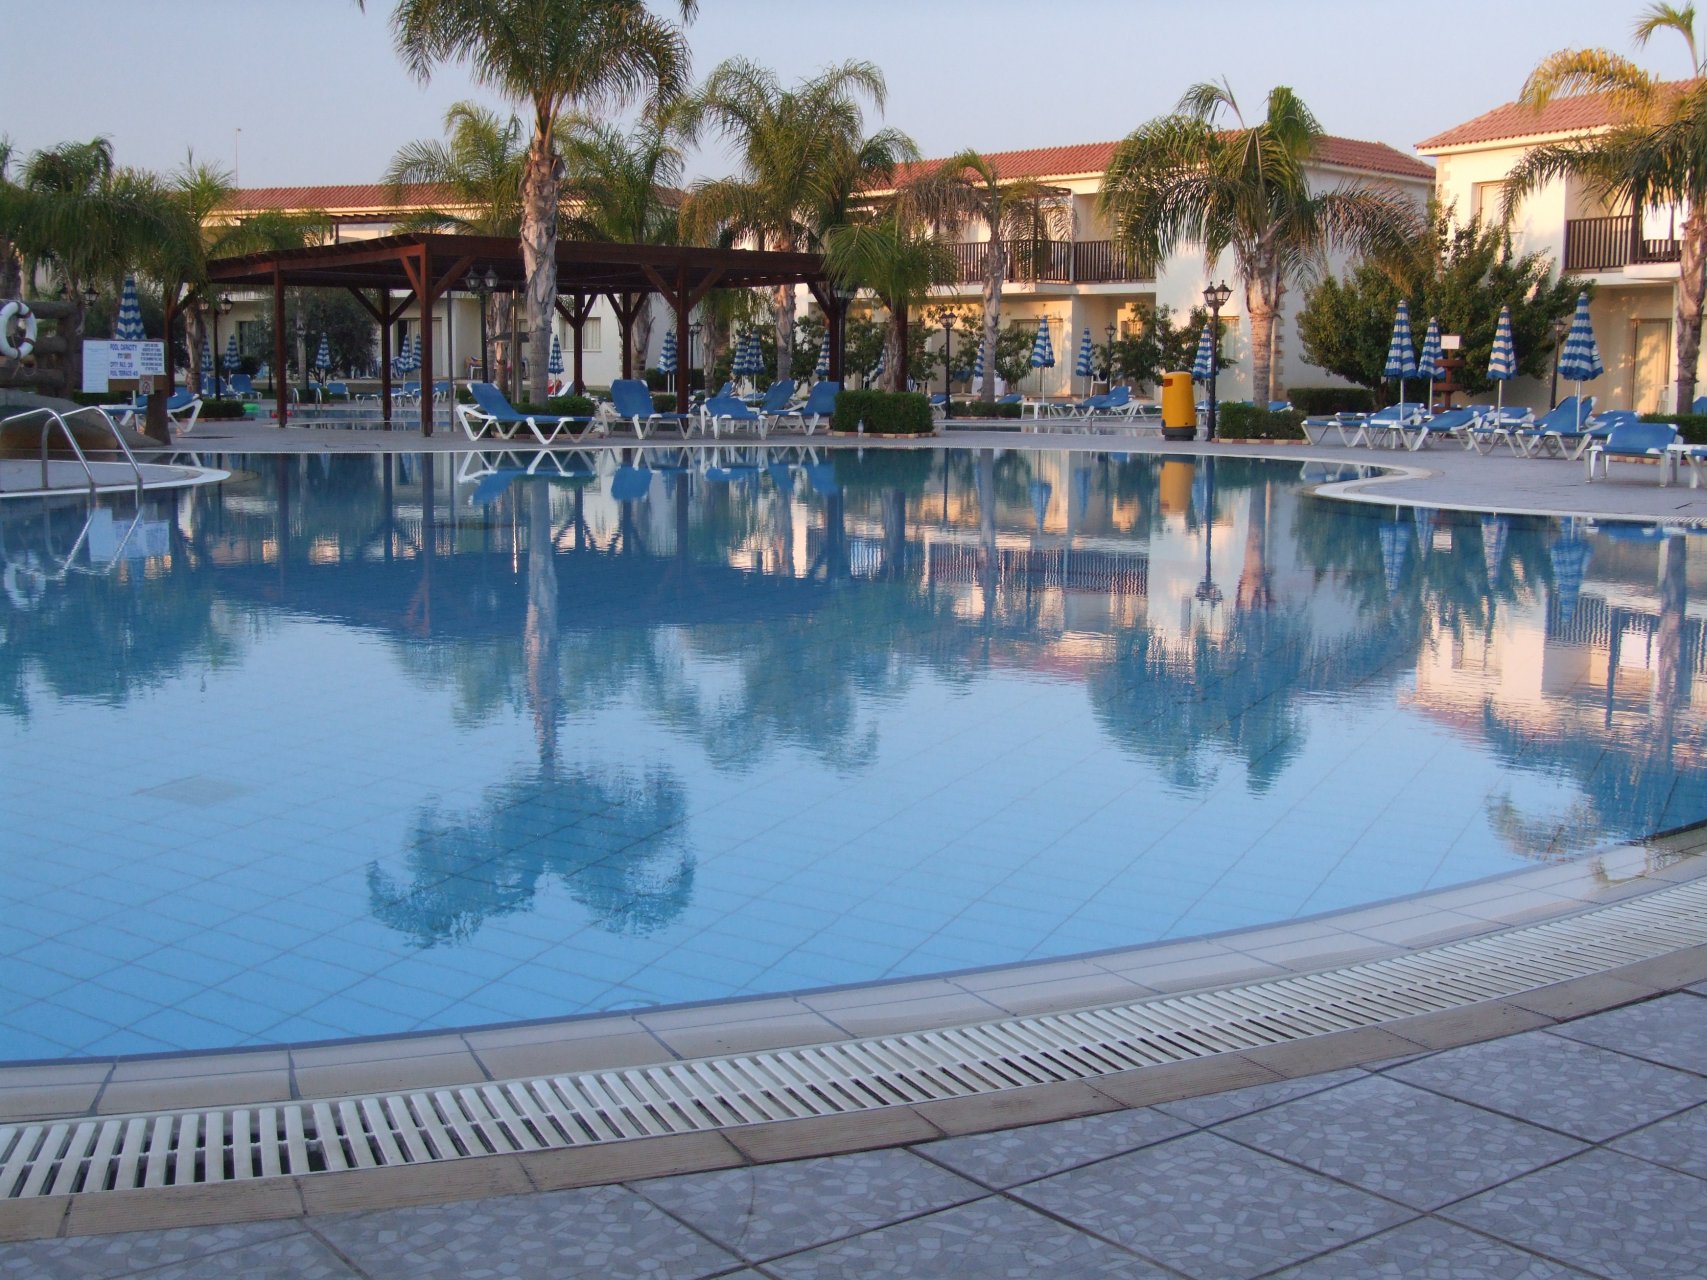 Hotelowe baseny